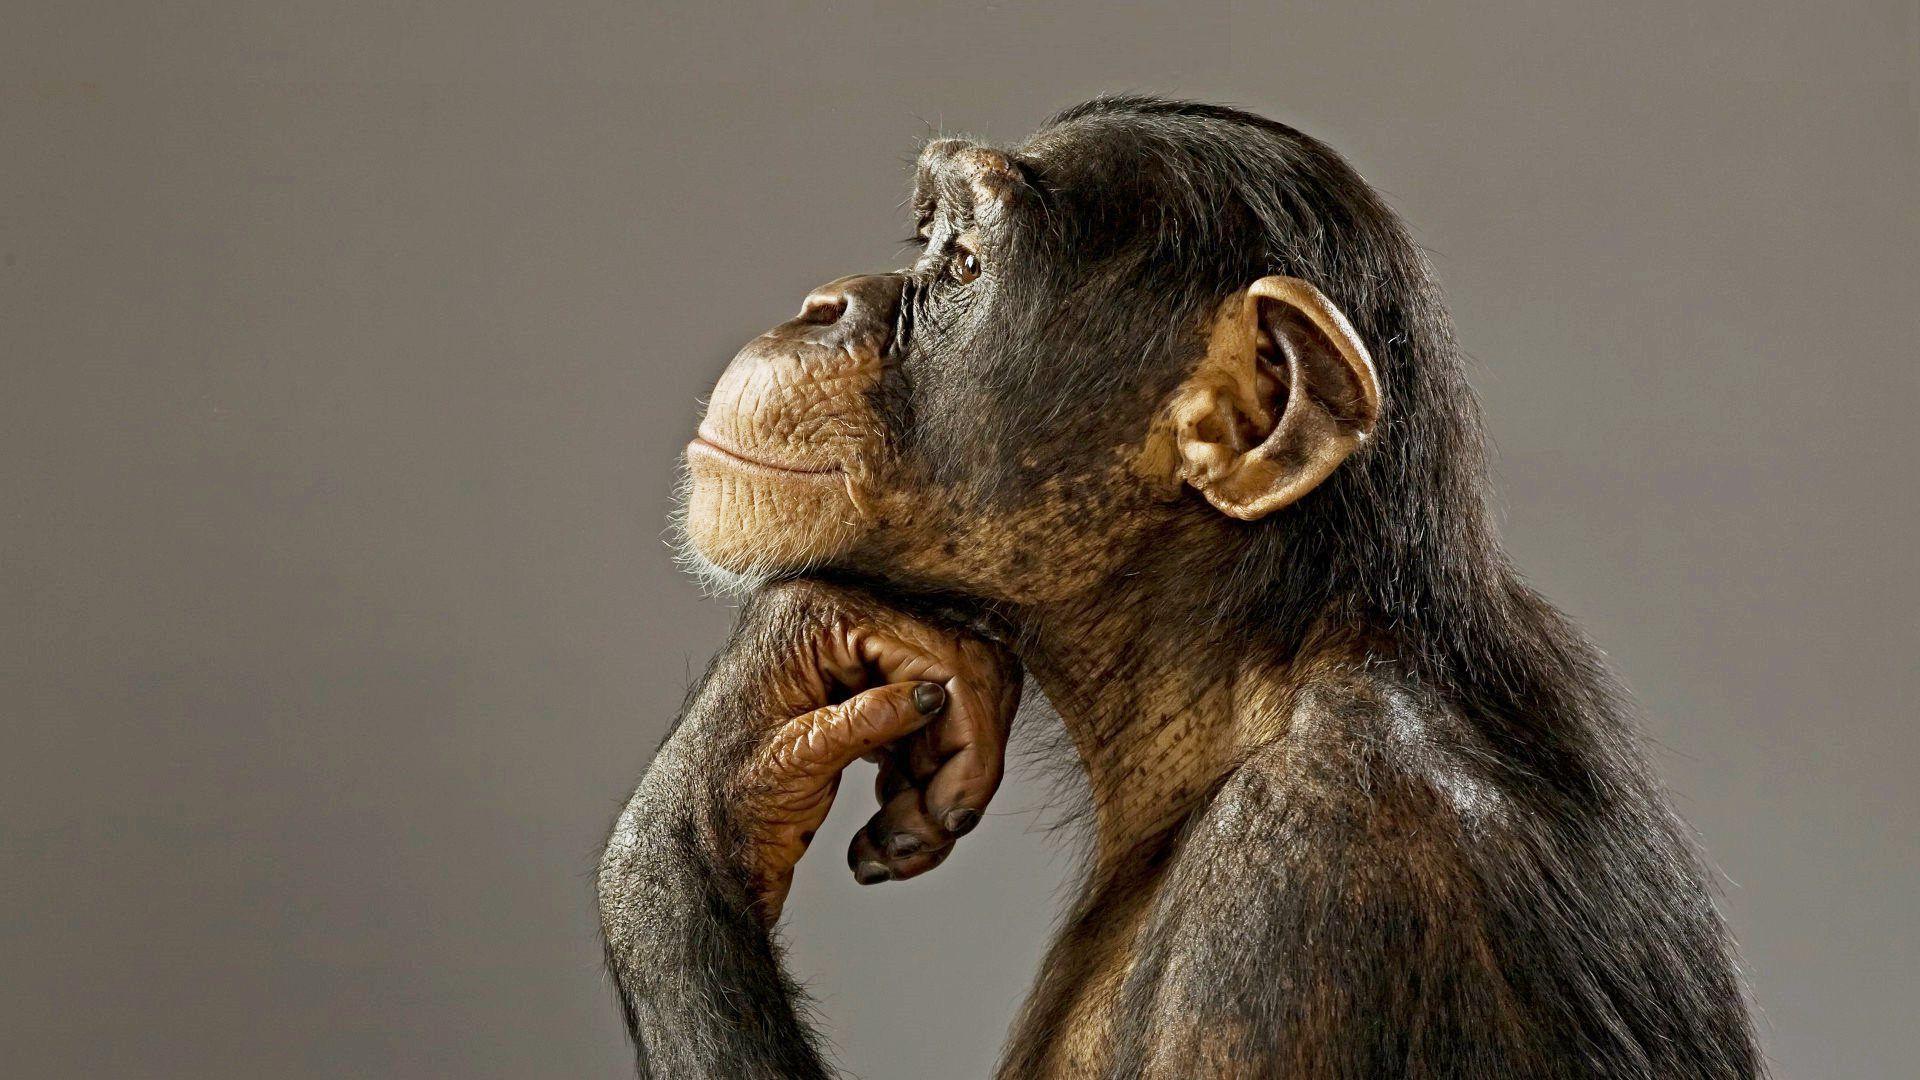 Chimpanzee Wallpaper Iphone